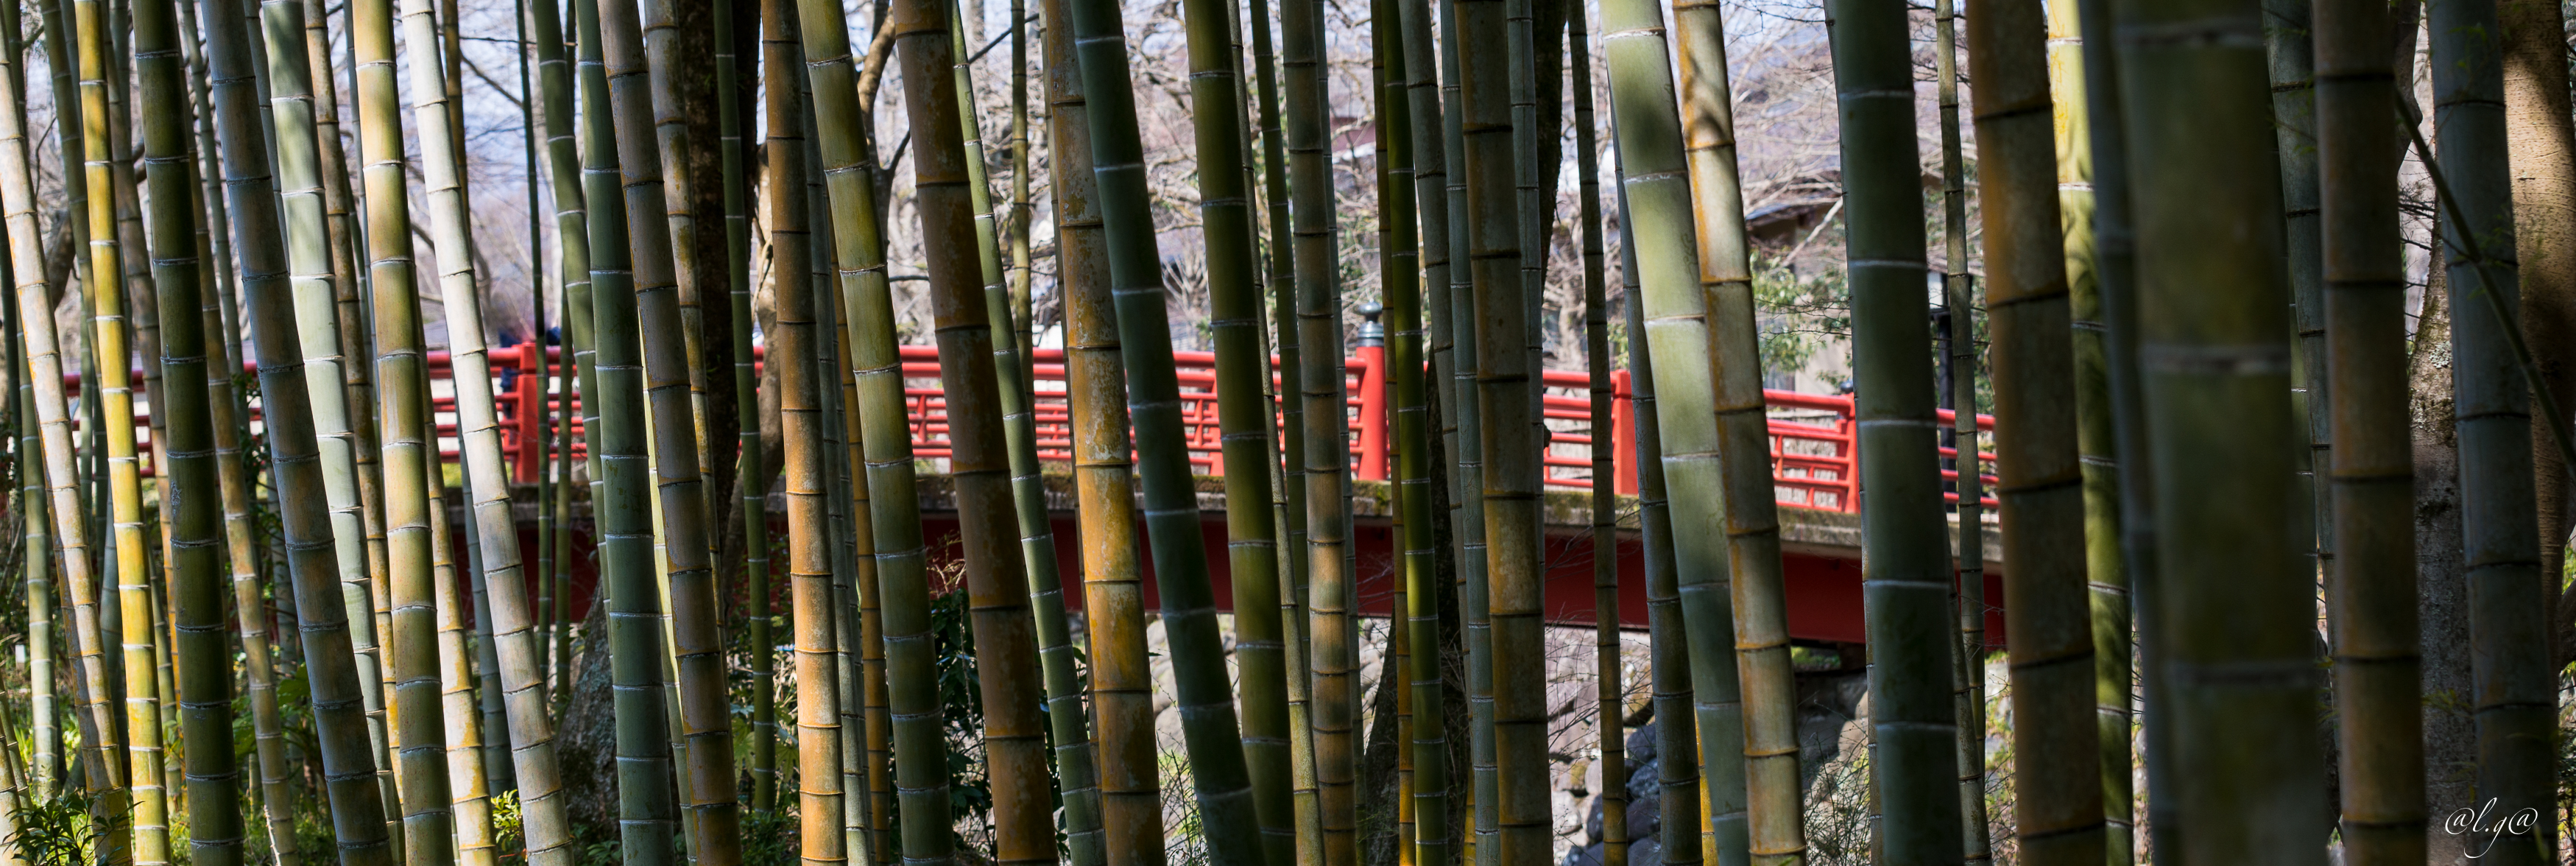 Shuzenji : Chirukin no Komichi  (La forêt de bambous)